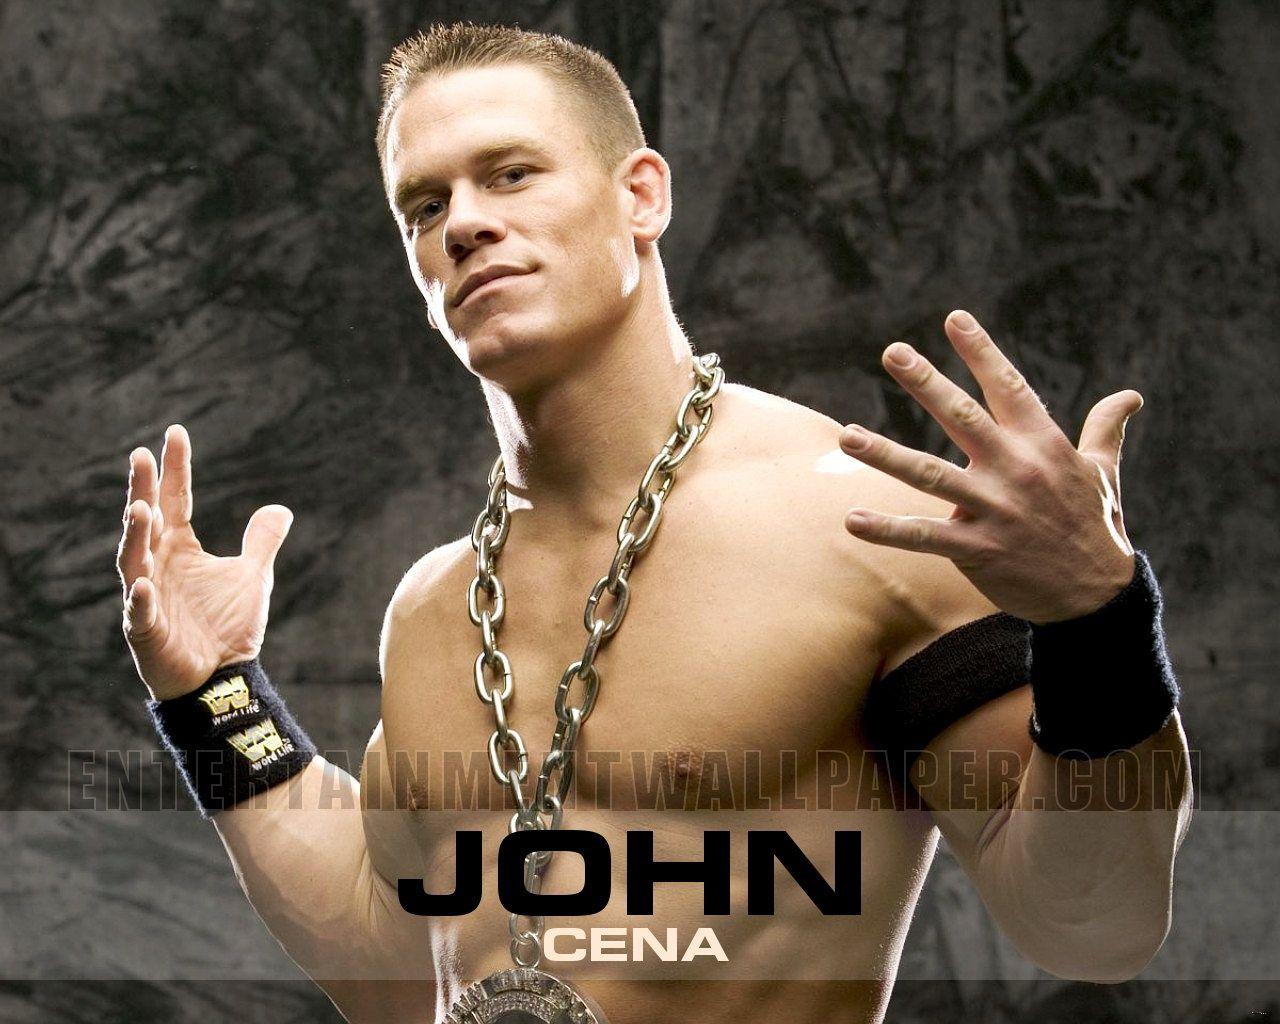 best John Cena Wallpaper image. John cena, Wwe